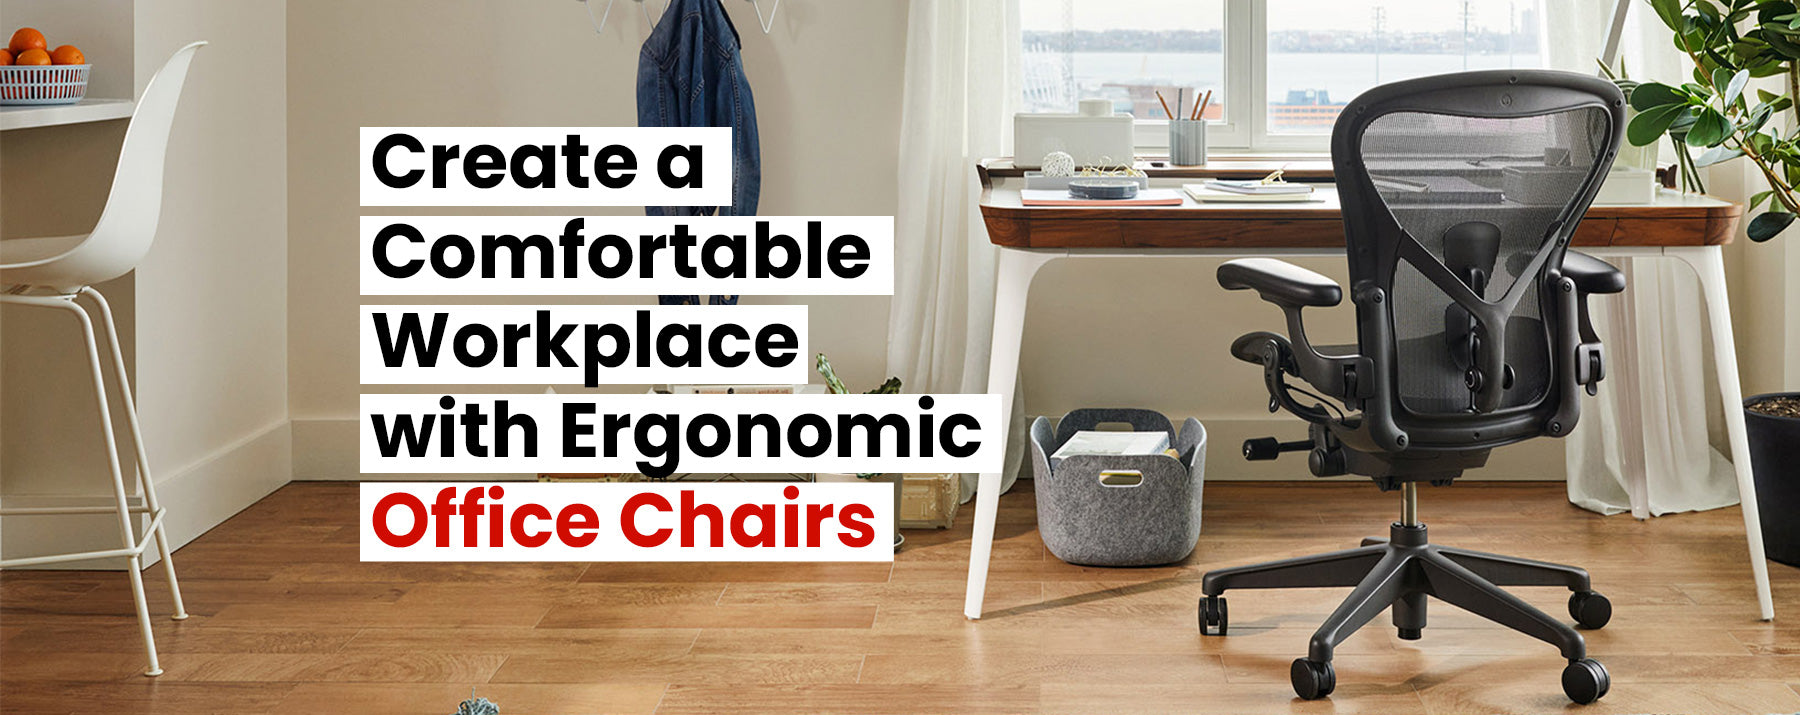 ergonomic office chairs online in NZ